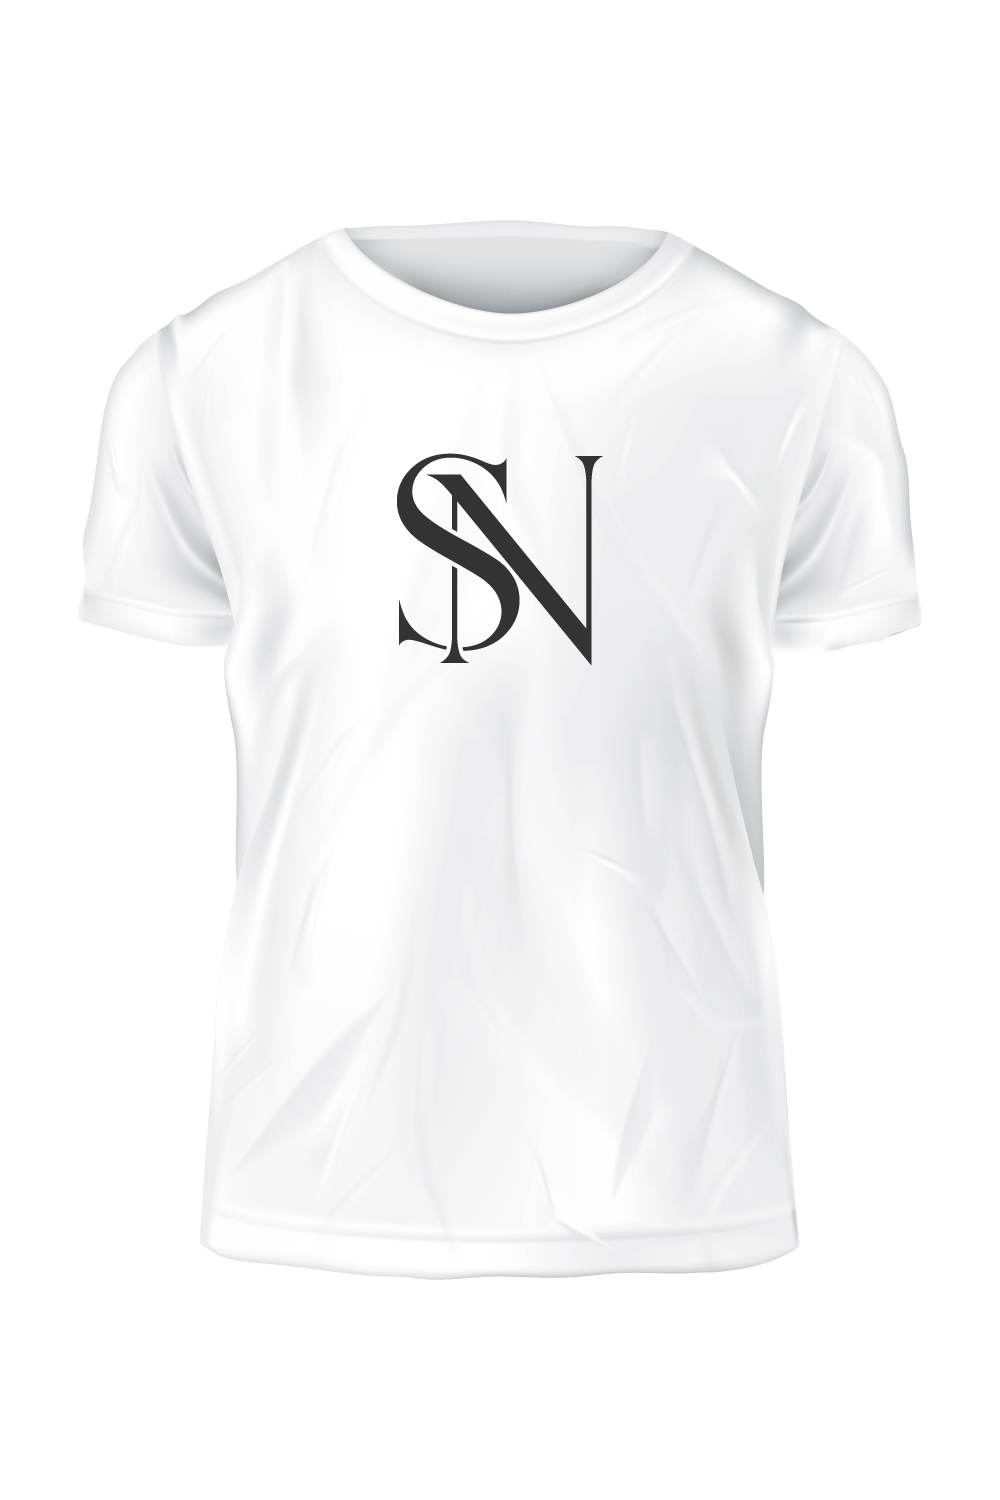 SN logo design pinterest preview image.